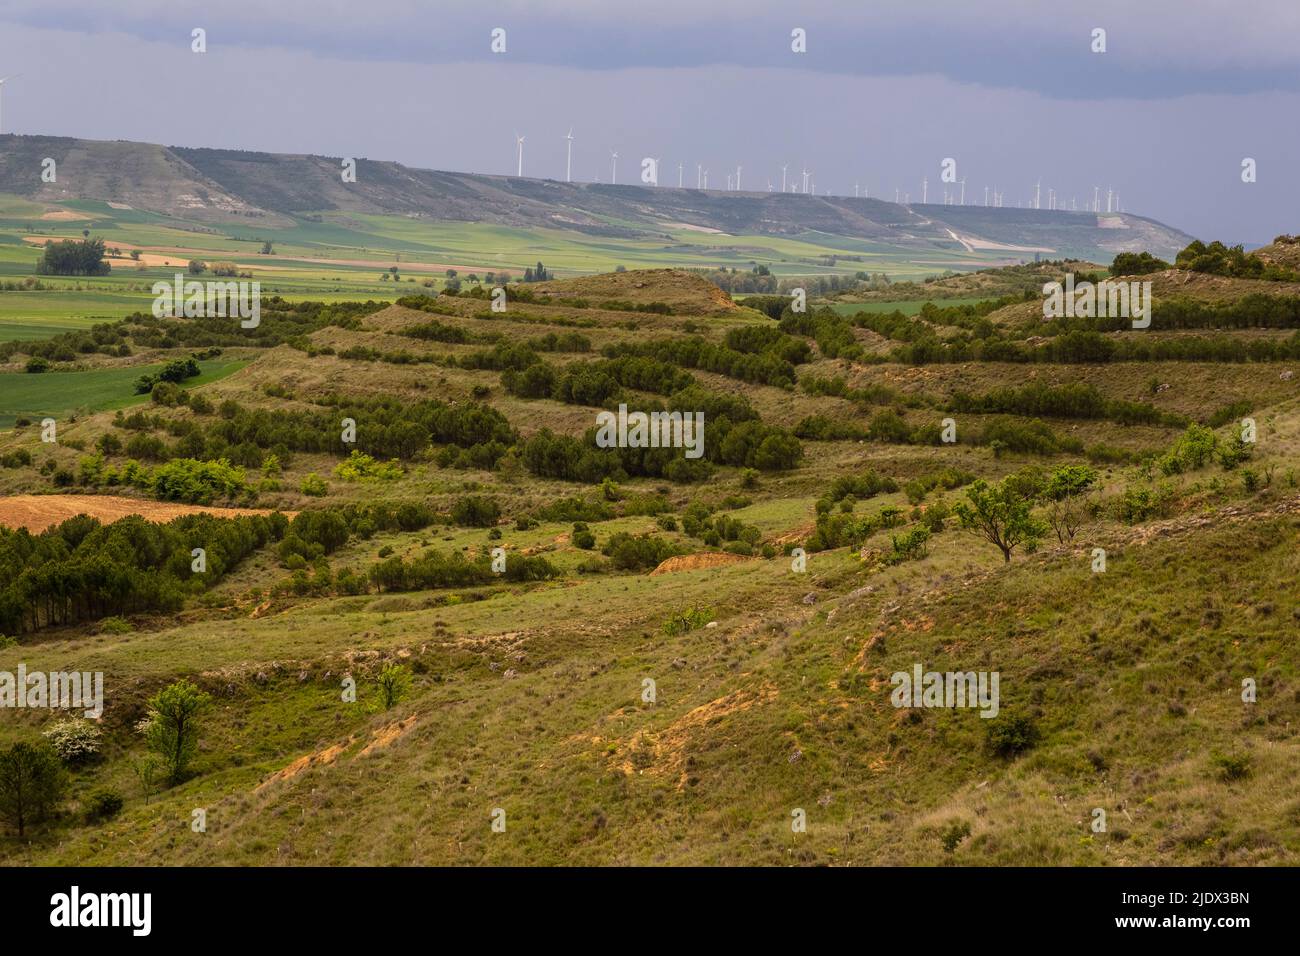 Spain, Castilla y Leon. Windmills Line a Ridge near Castrojeriz, as seen from the Camino de Santiago. Stock Photo